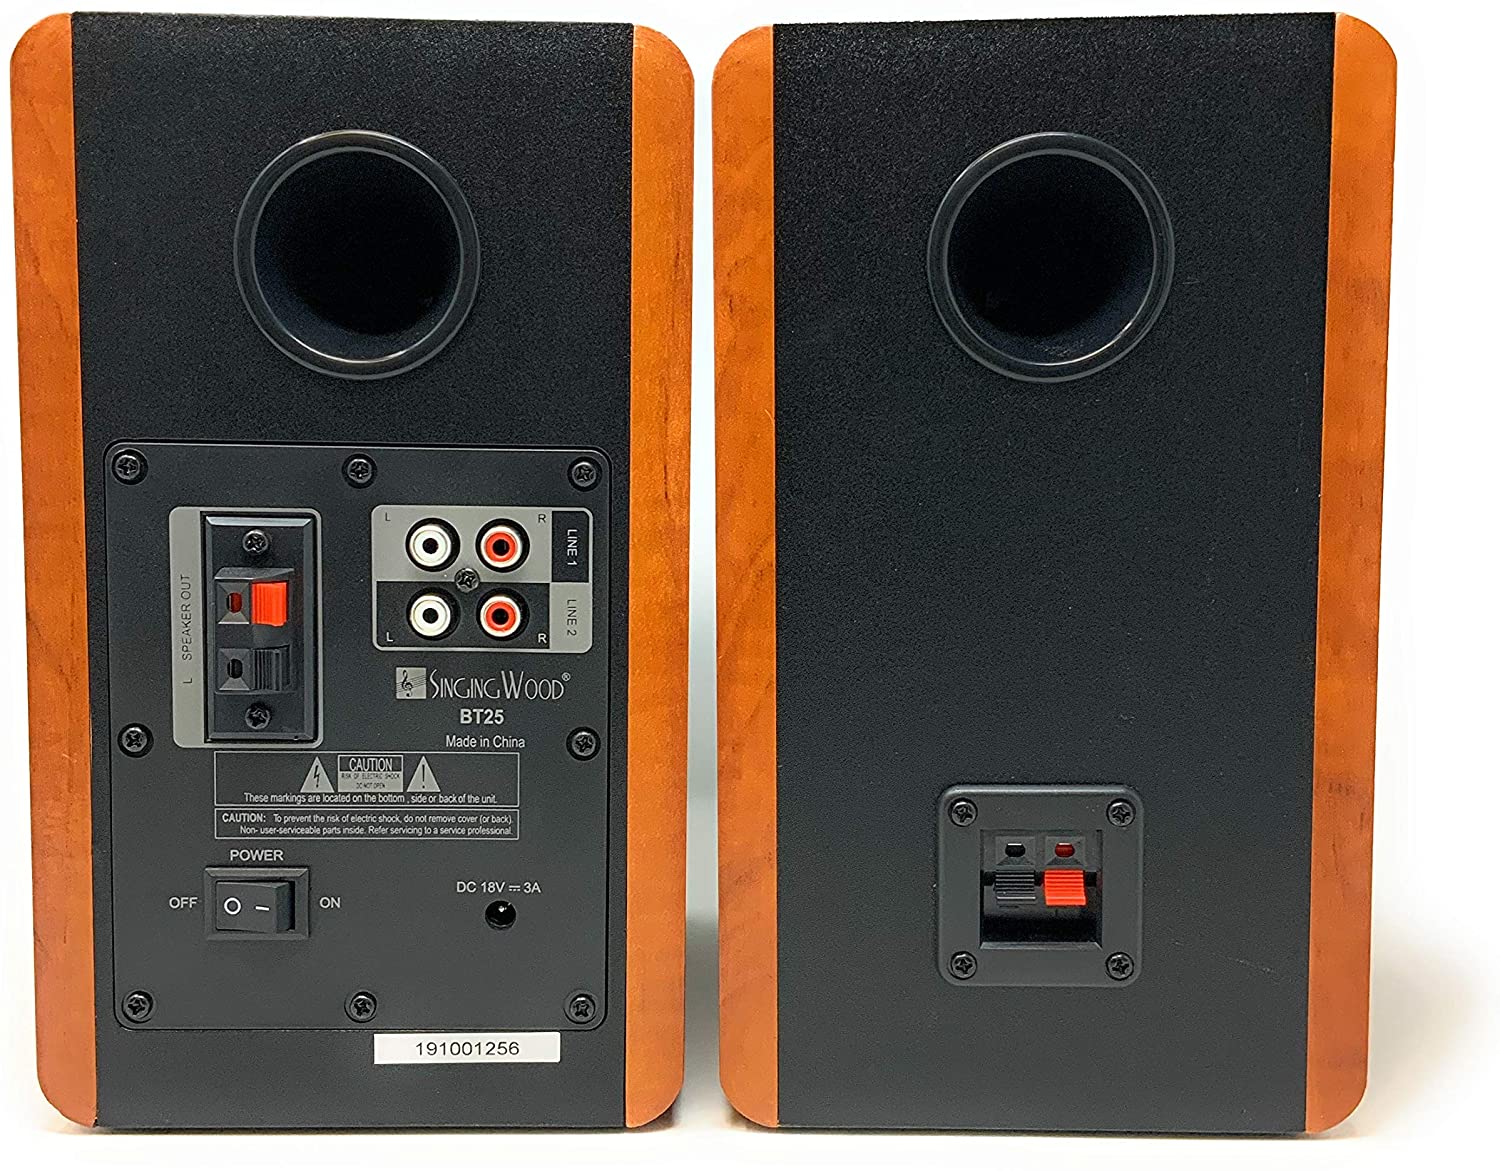 SINGING WOOD BT25 Powered BT Bookshelf Speakers Studio Monitor Speakers 2 AUX Input 2 Speakers Wooden Enclosure Max 50 Watts RMS( Cherry wood) - image 5 of 10